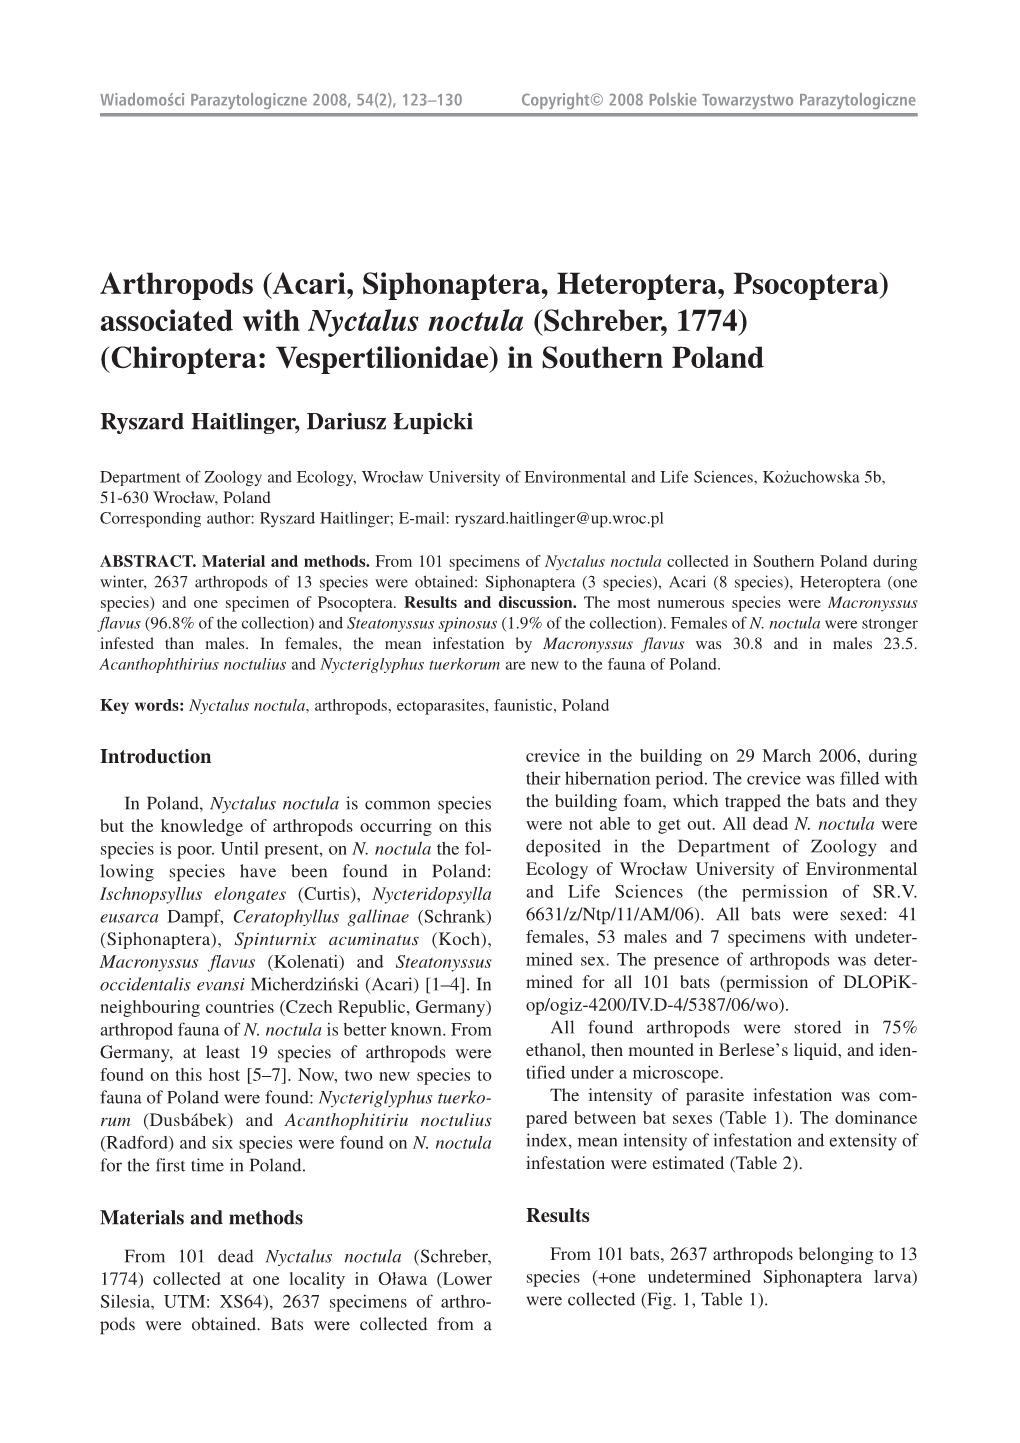 Arthropods (Acari, Siphonaptera, Heteroptera, Psocoptera) Associated with Nyctalus Noctula (Schreber, 1774) (Chiroptera: Vespertilionidae) in Southern Poland